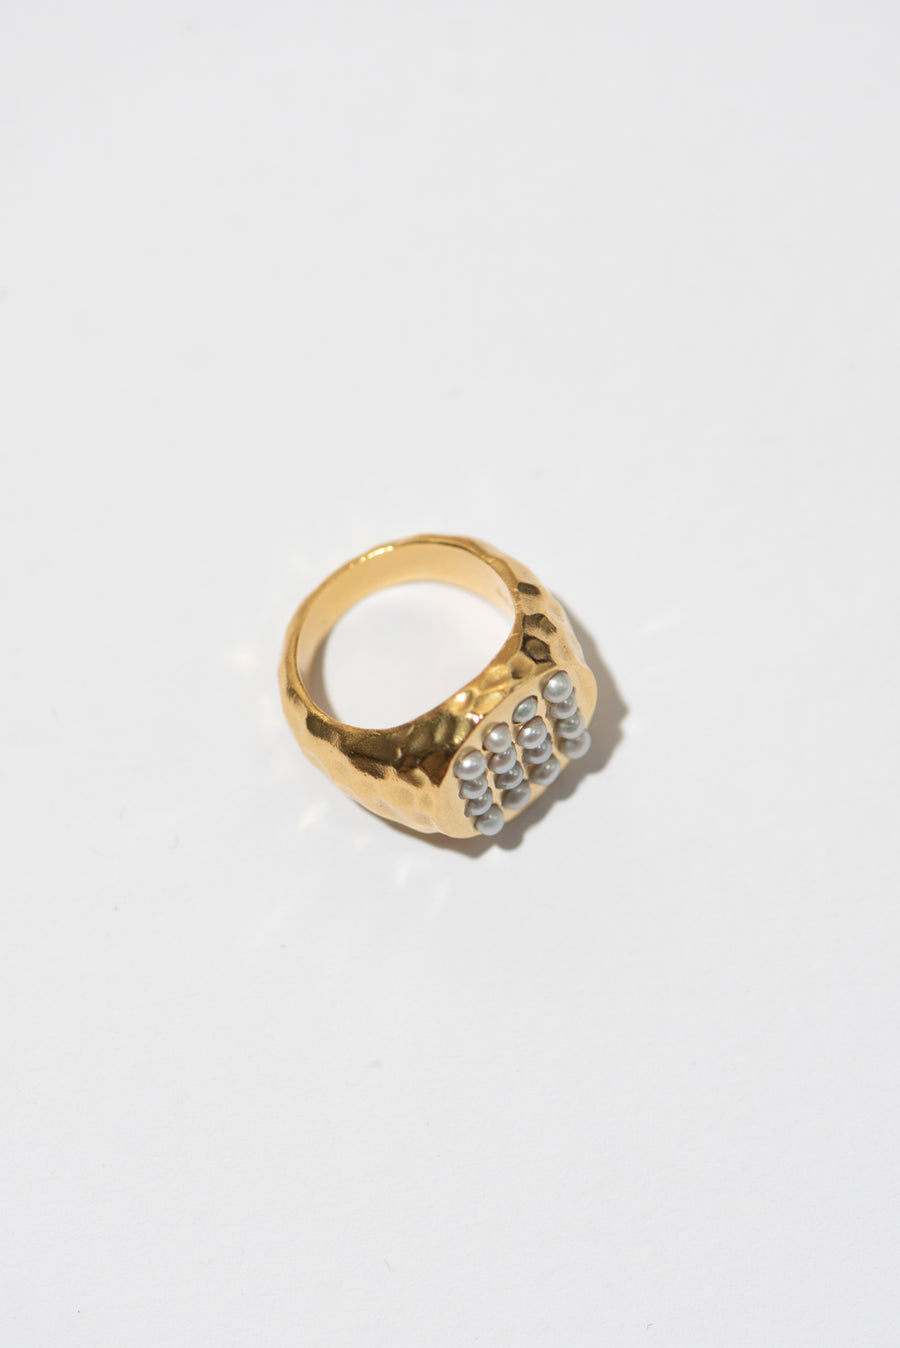 The Mini Pearl Signet Ring